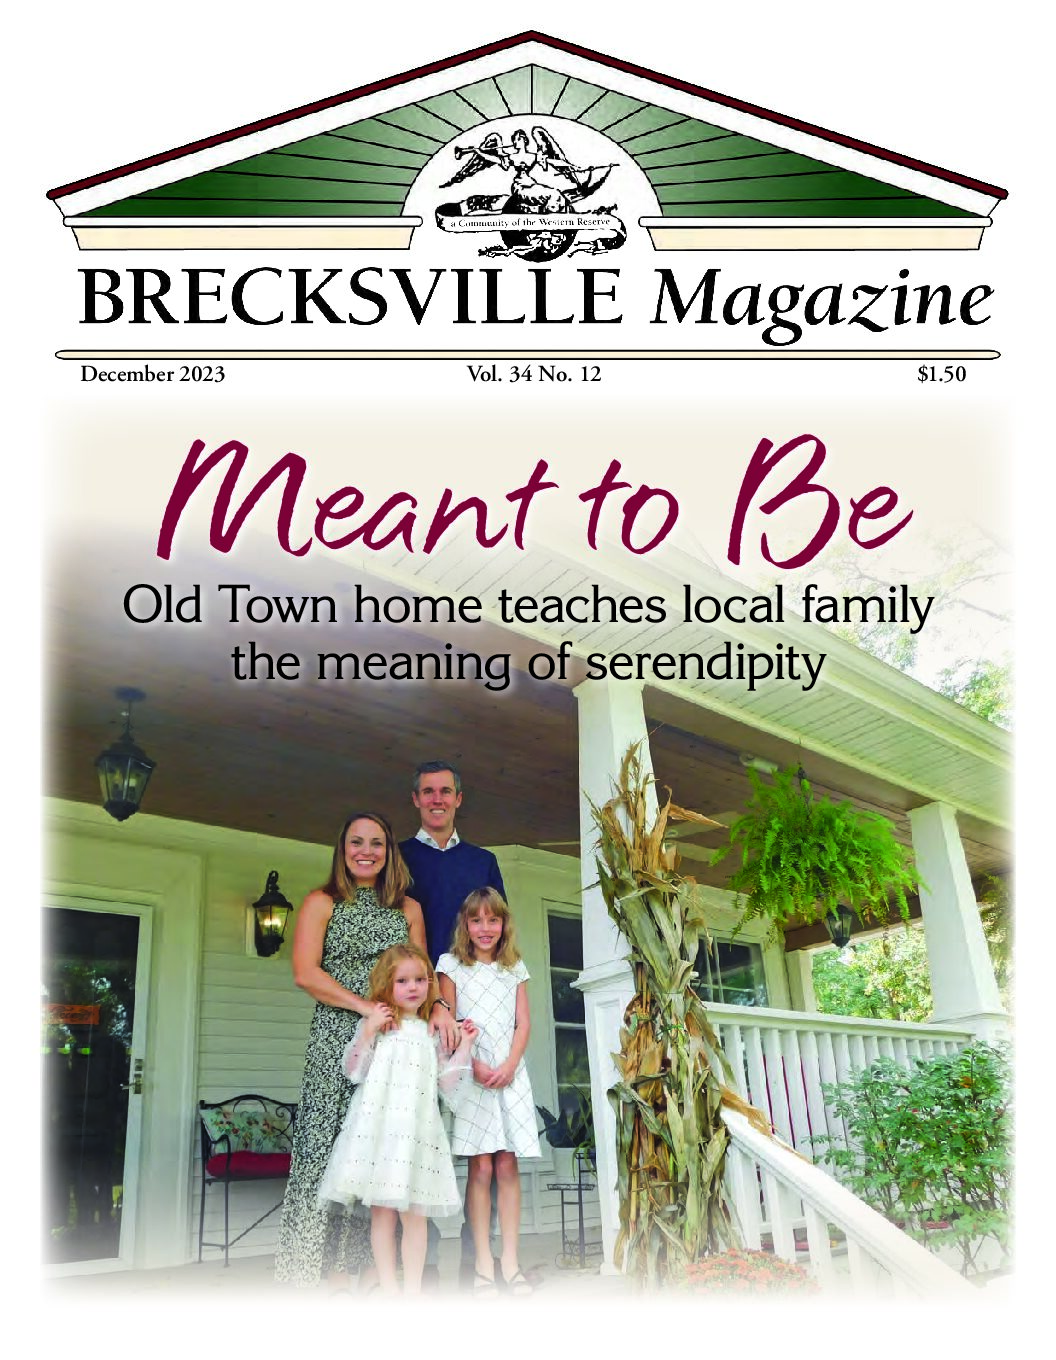 View the full December 2023 Brecskville Magazine